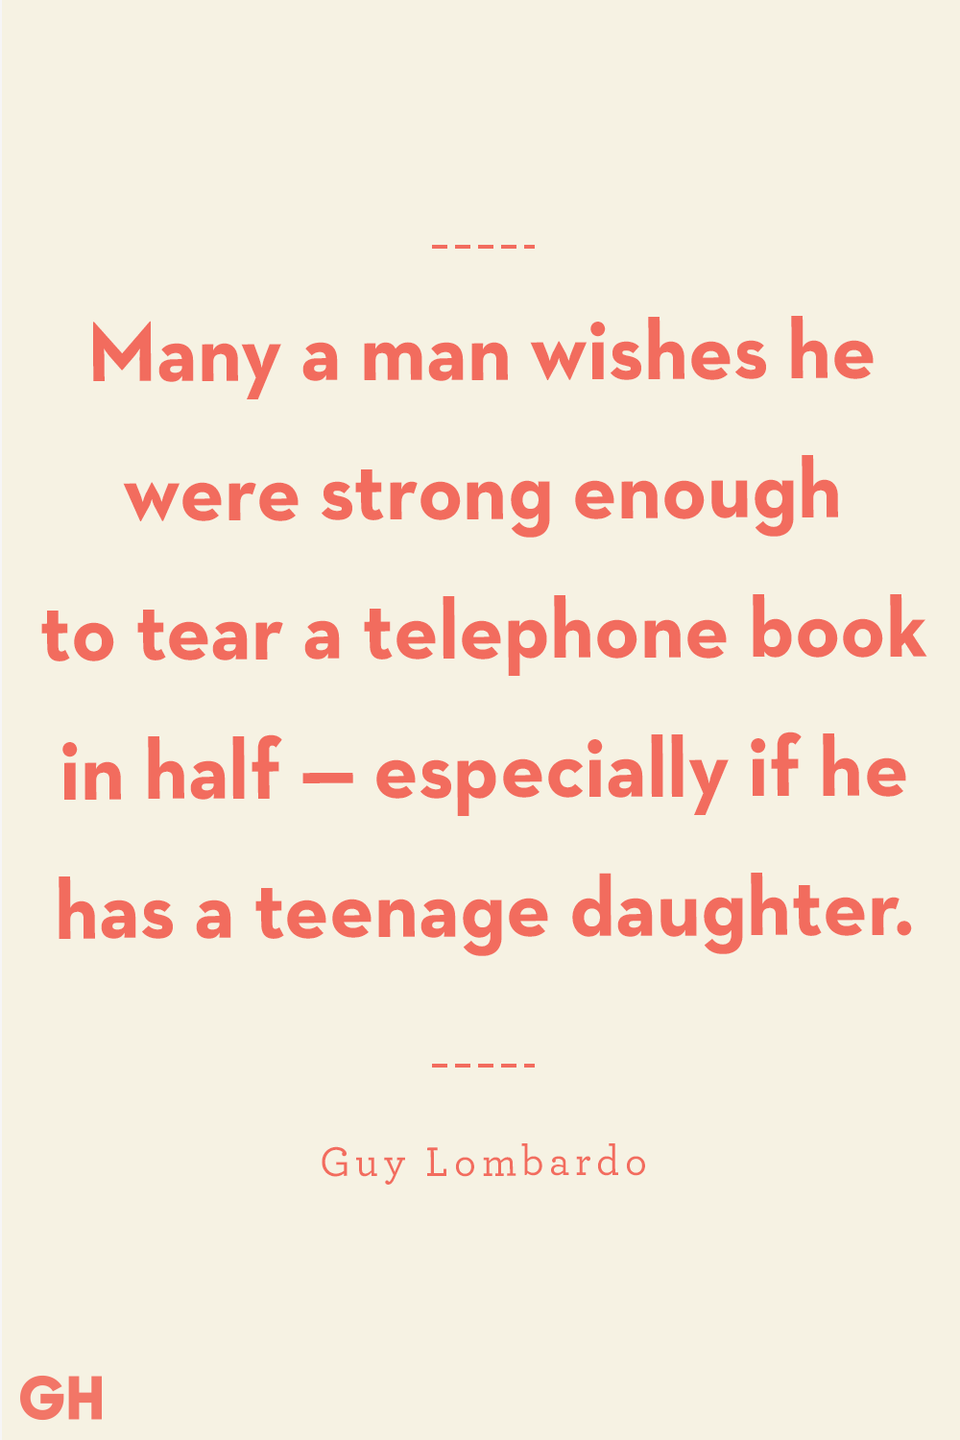 56) Guy Lombardo